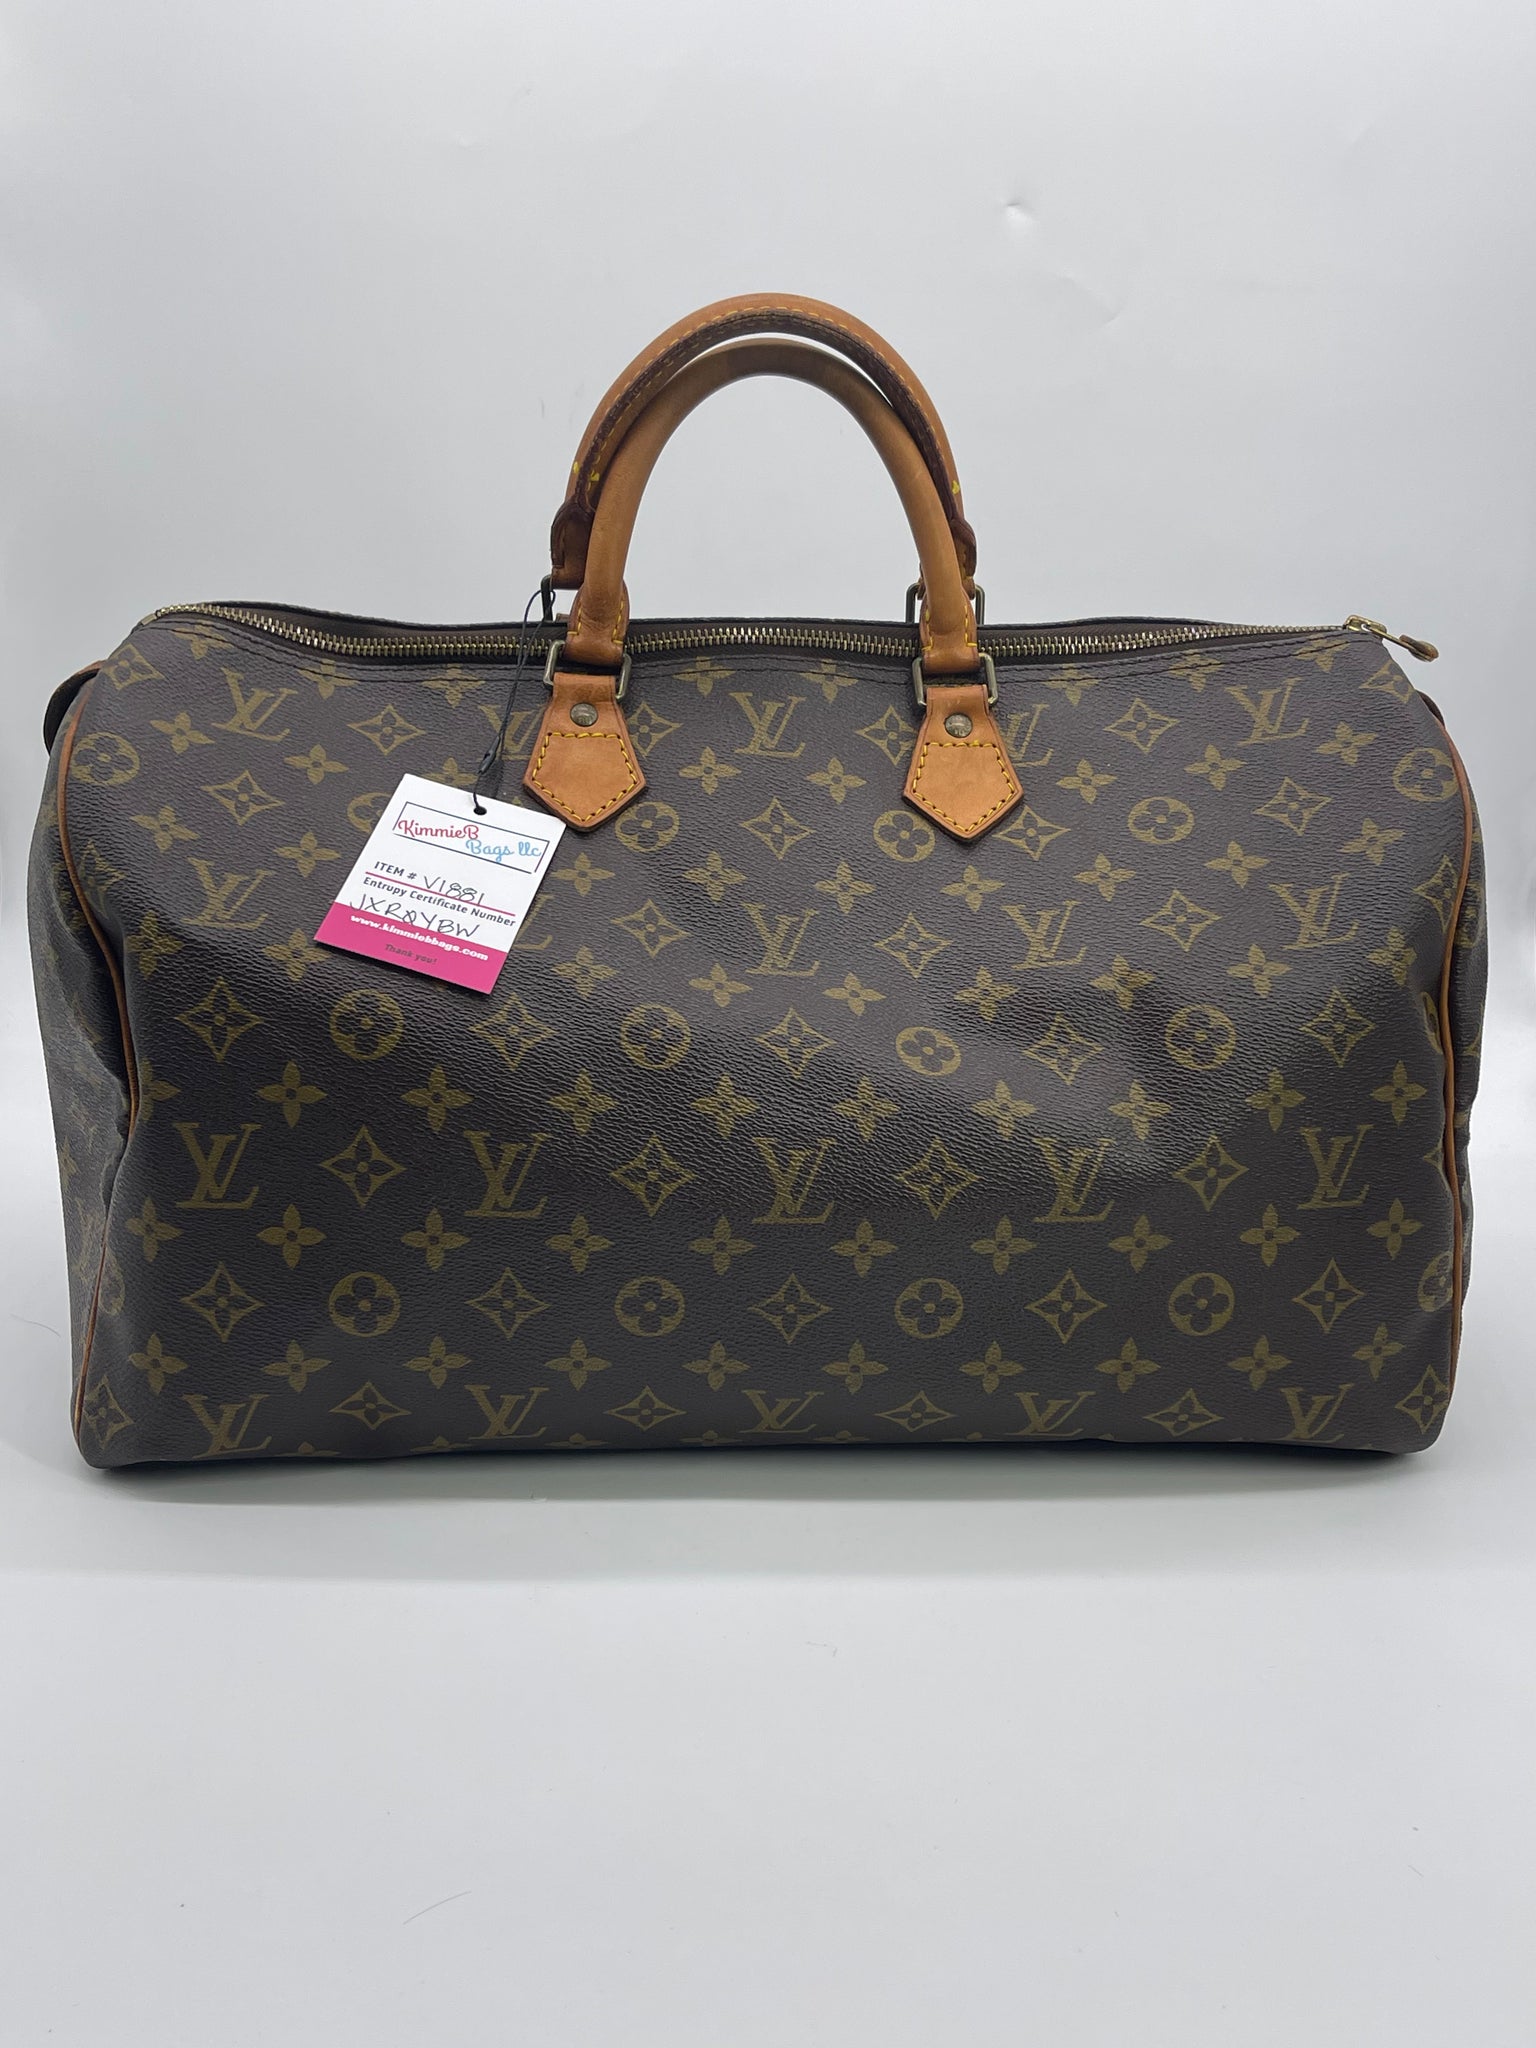 Authentic Preloved Louis Vuitton Monogram Speedy 40 Bag